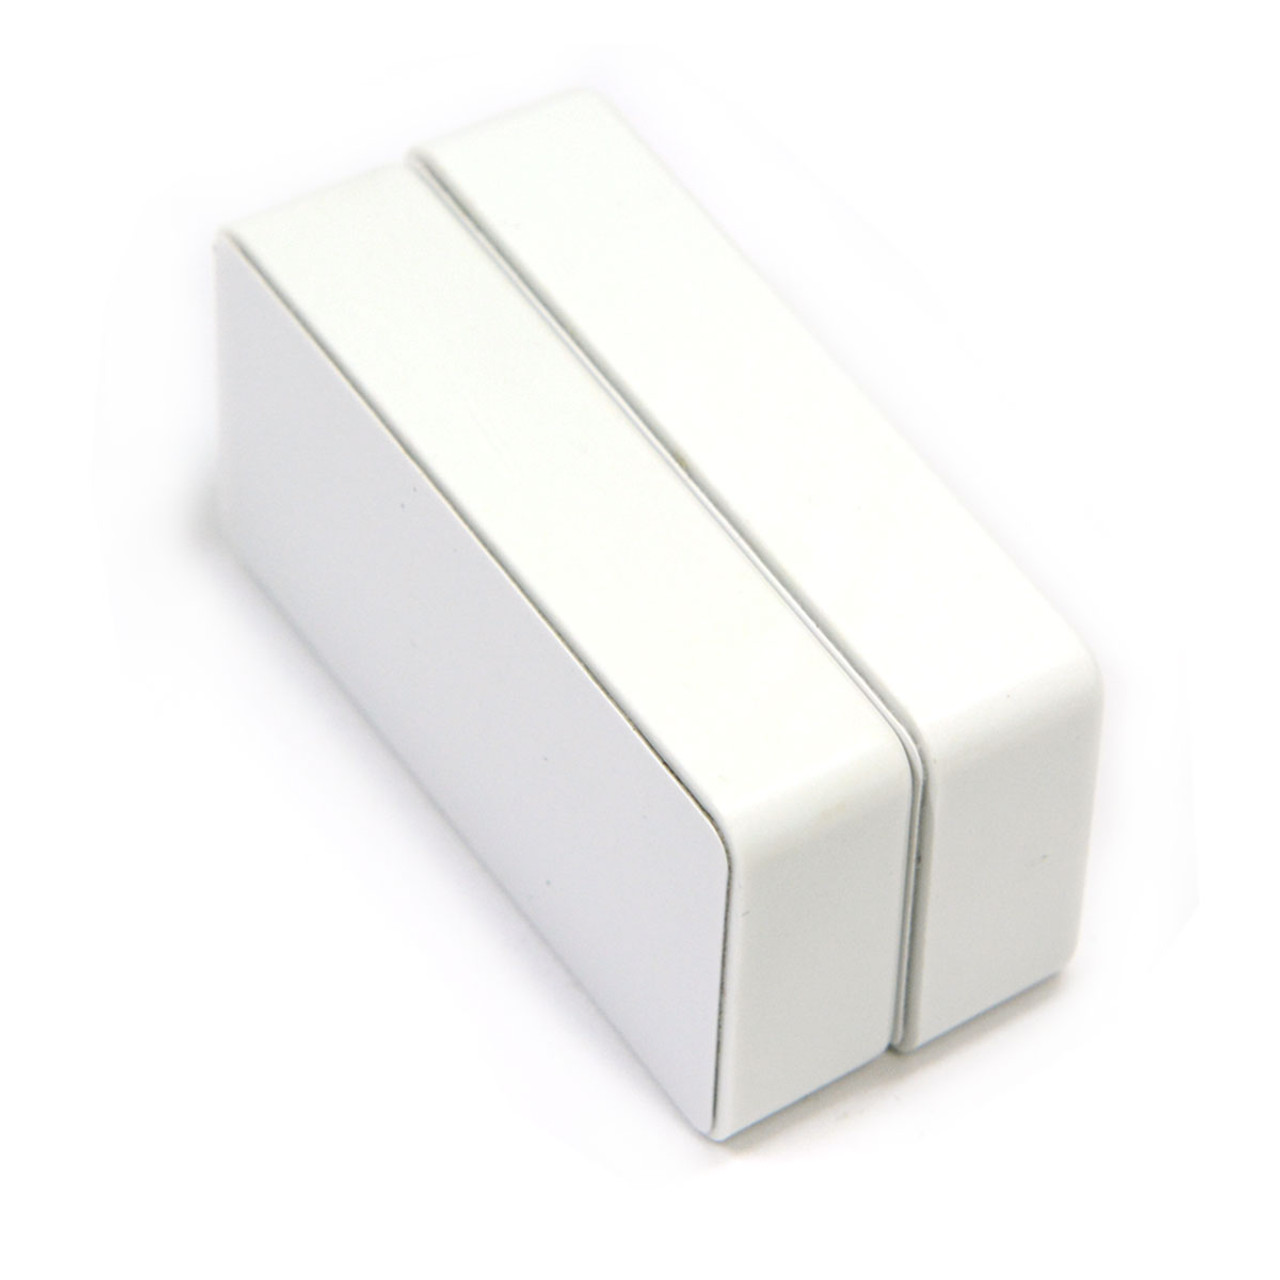 Magnetic Whiteboard Holders White Plastic Coated